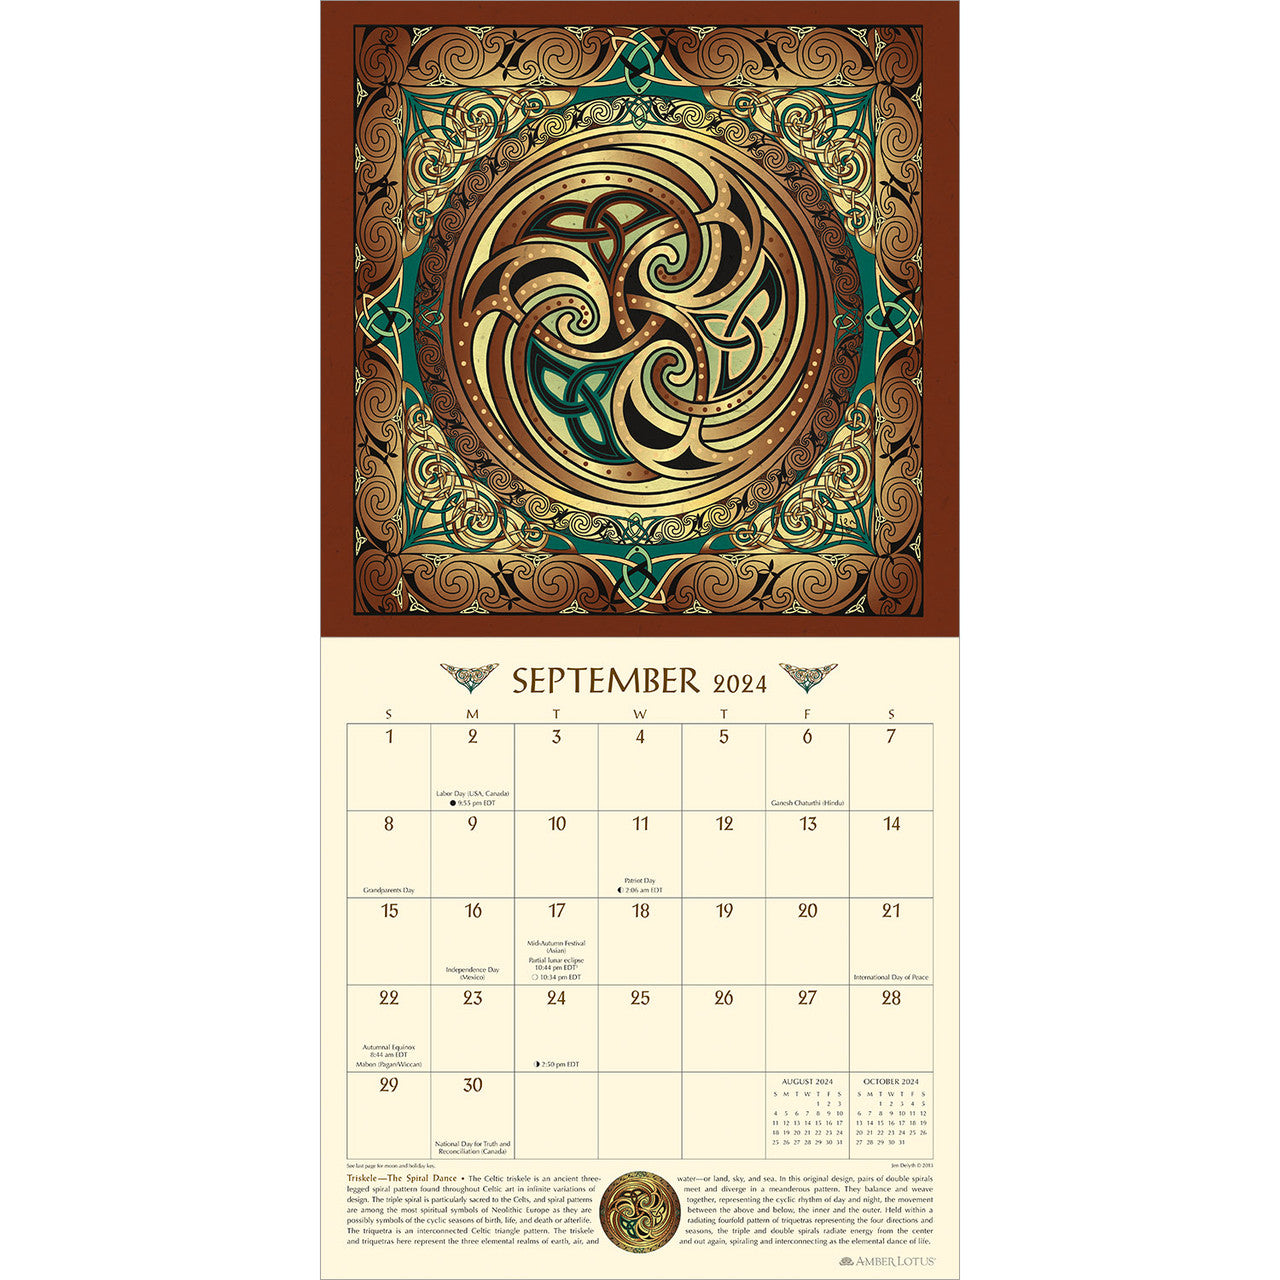 2024 Celtic Mandala Square Wall Calendar Art Calendars by Amber